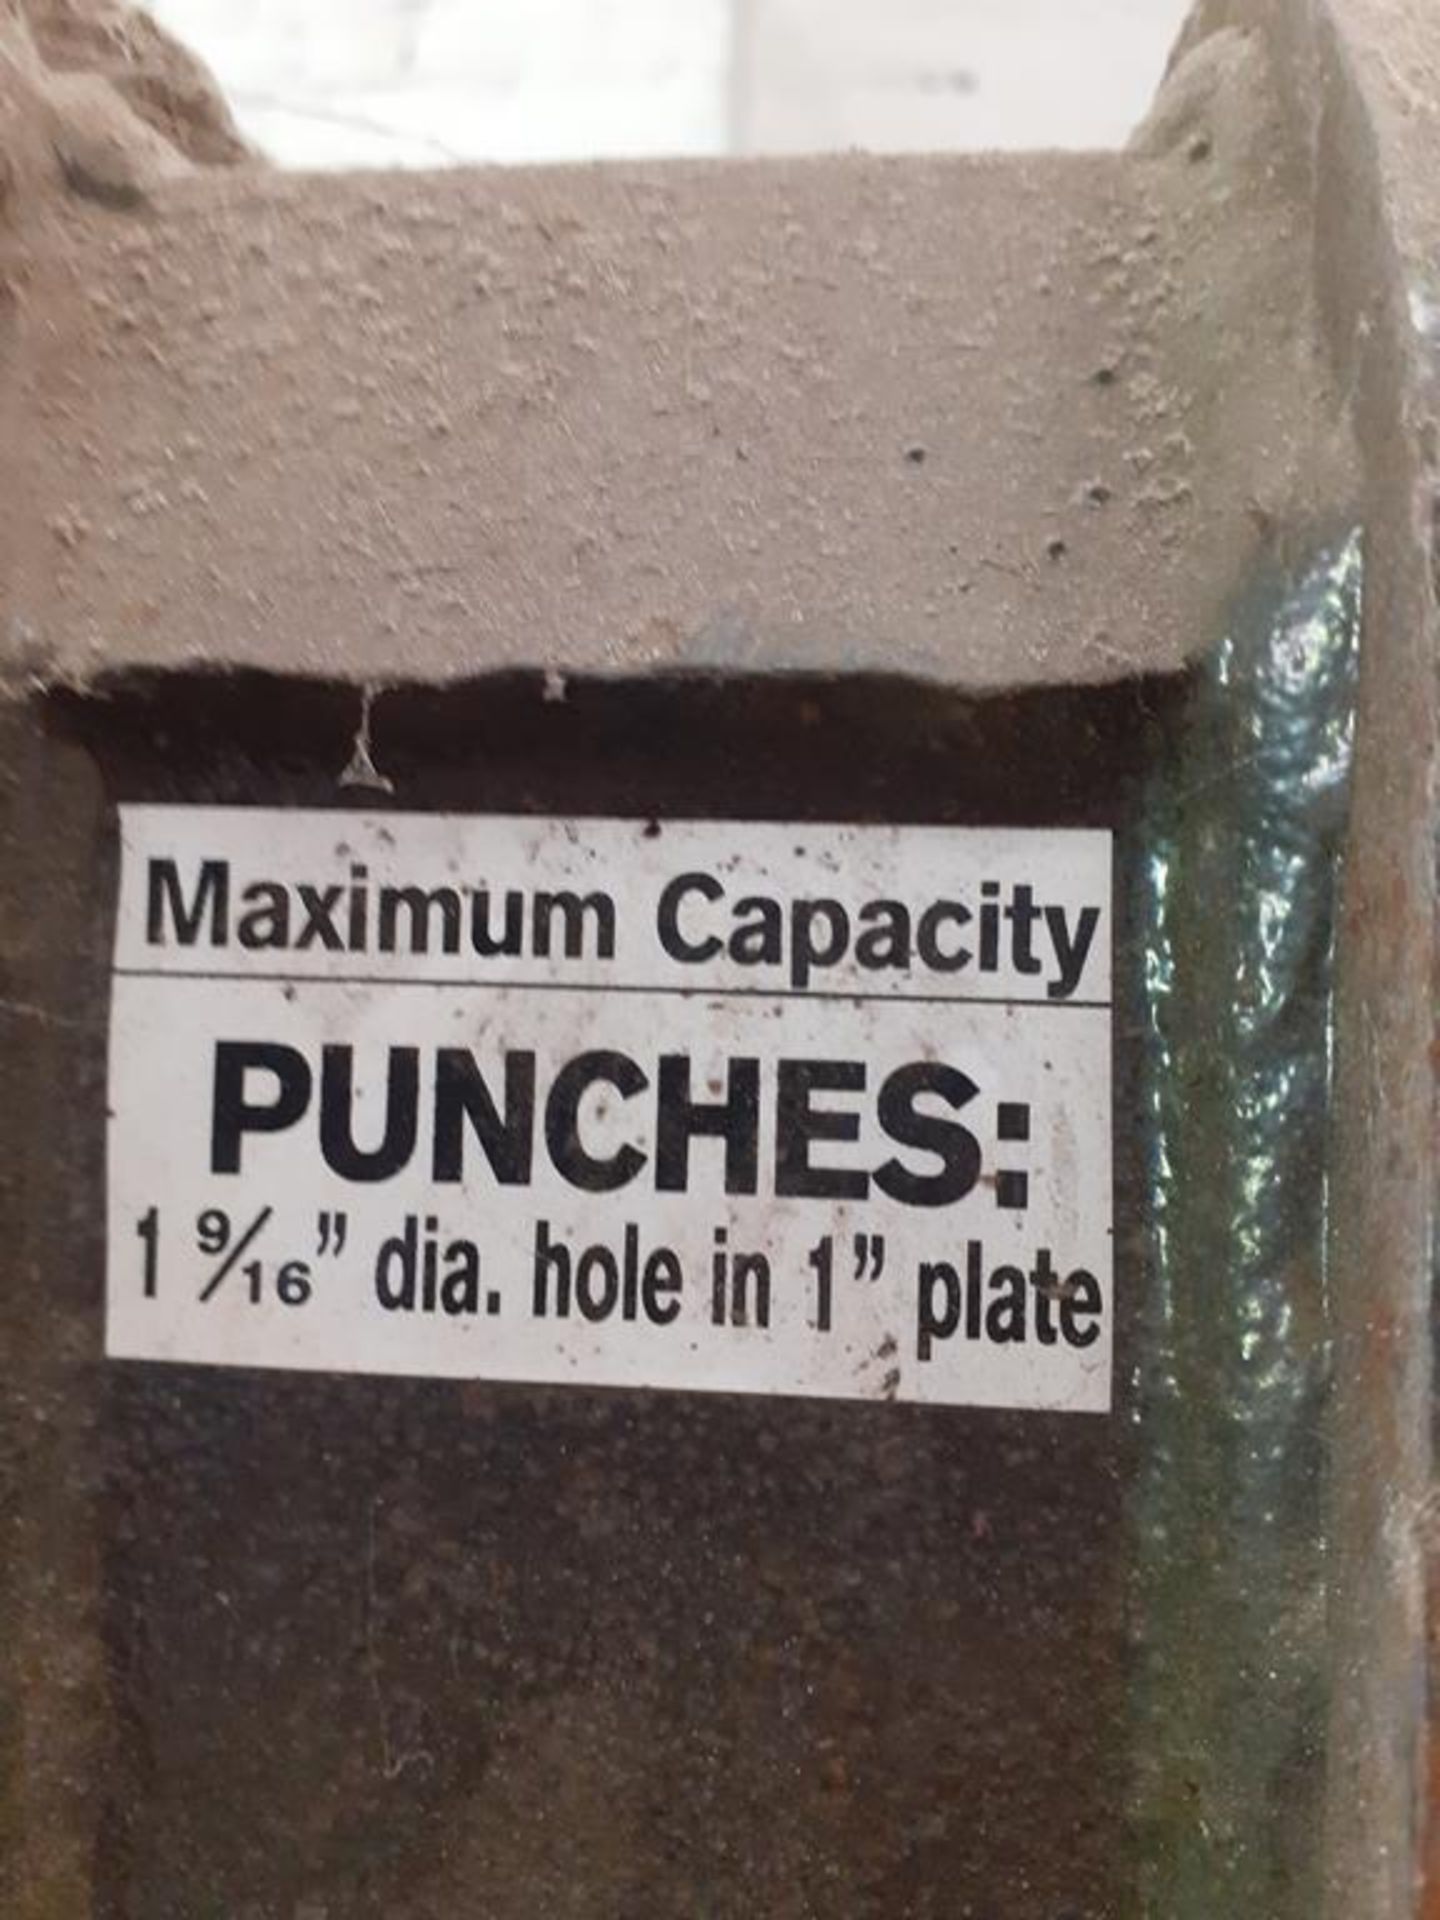 Edwards 125 ton super punch power press - Image 2 of 3